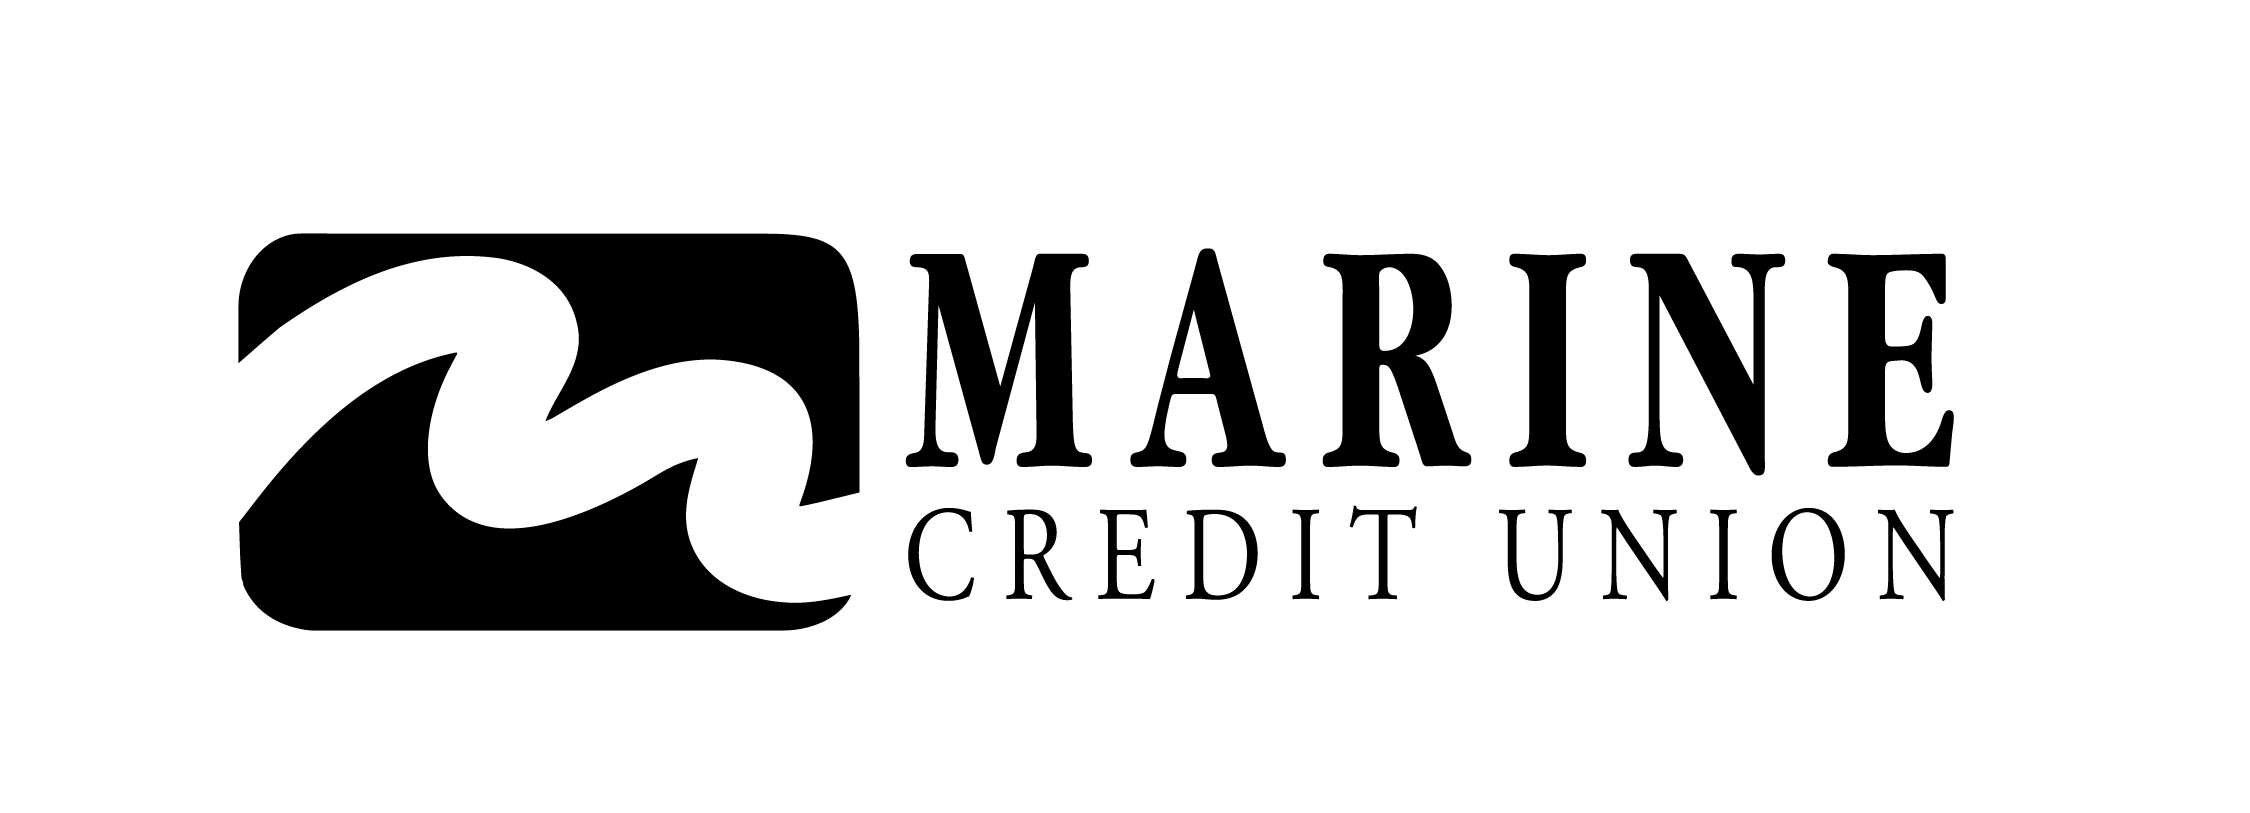 Marine credit union logo